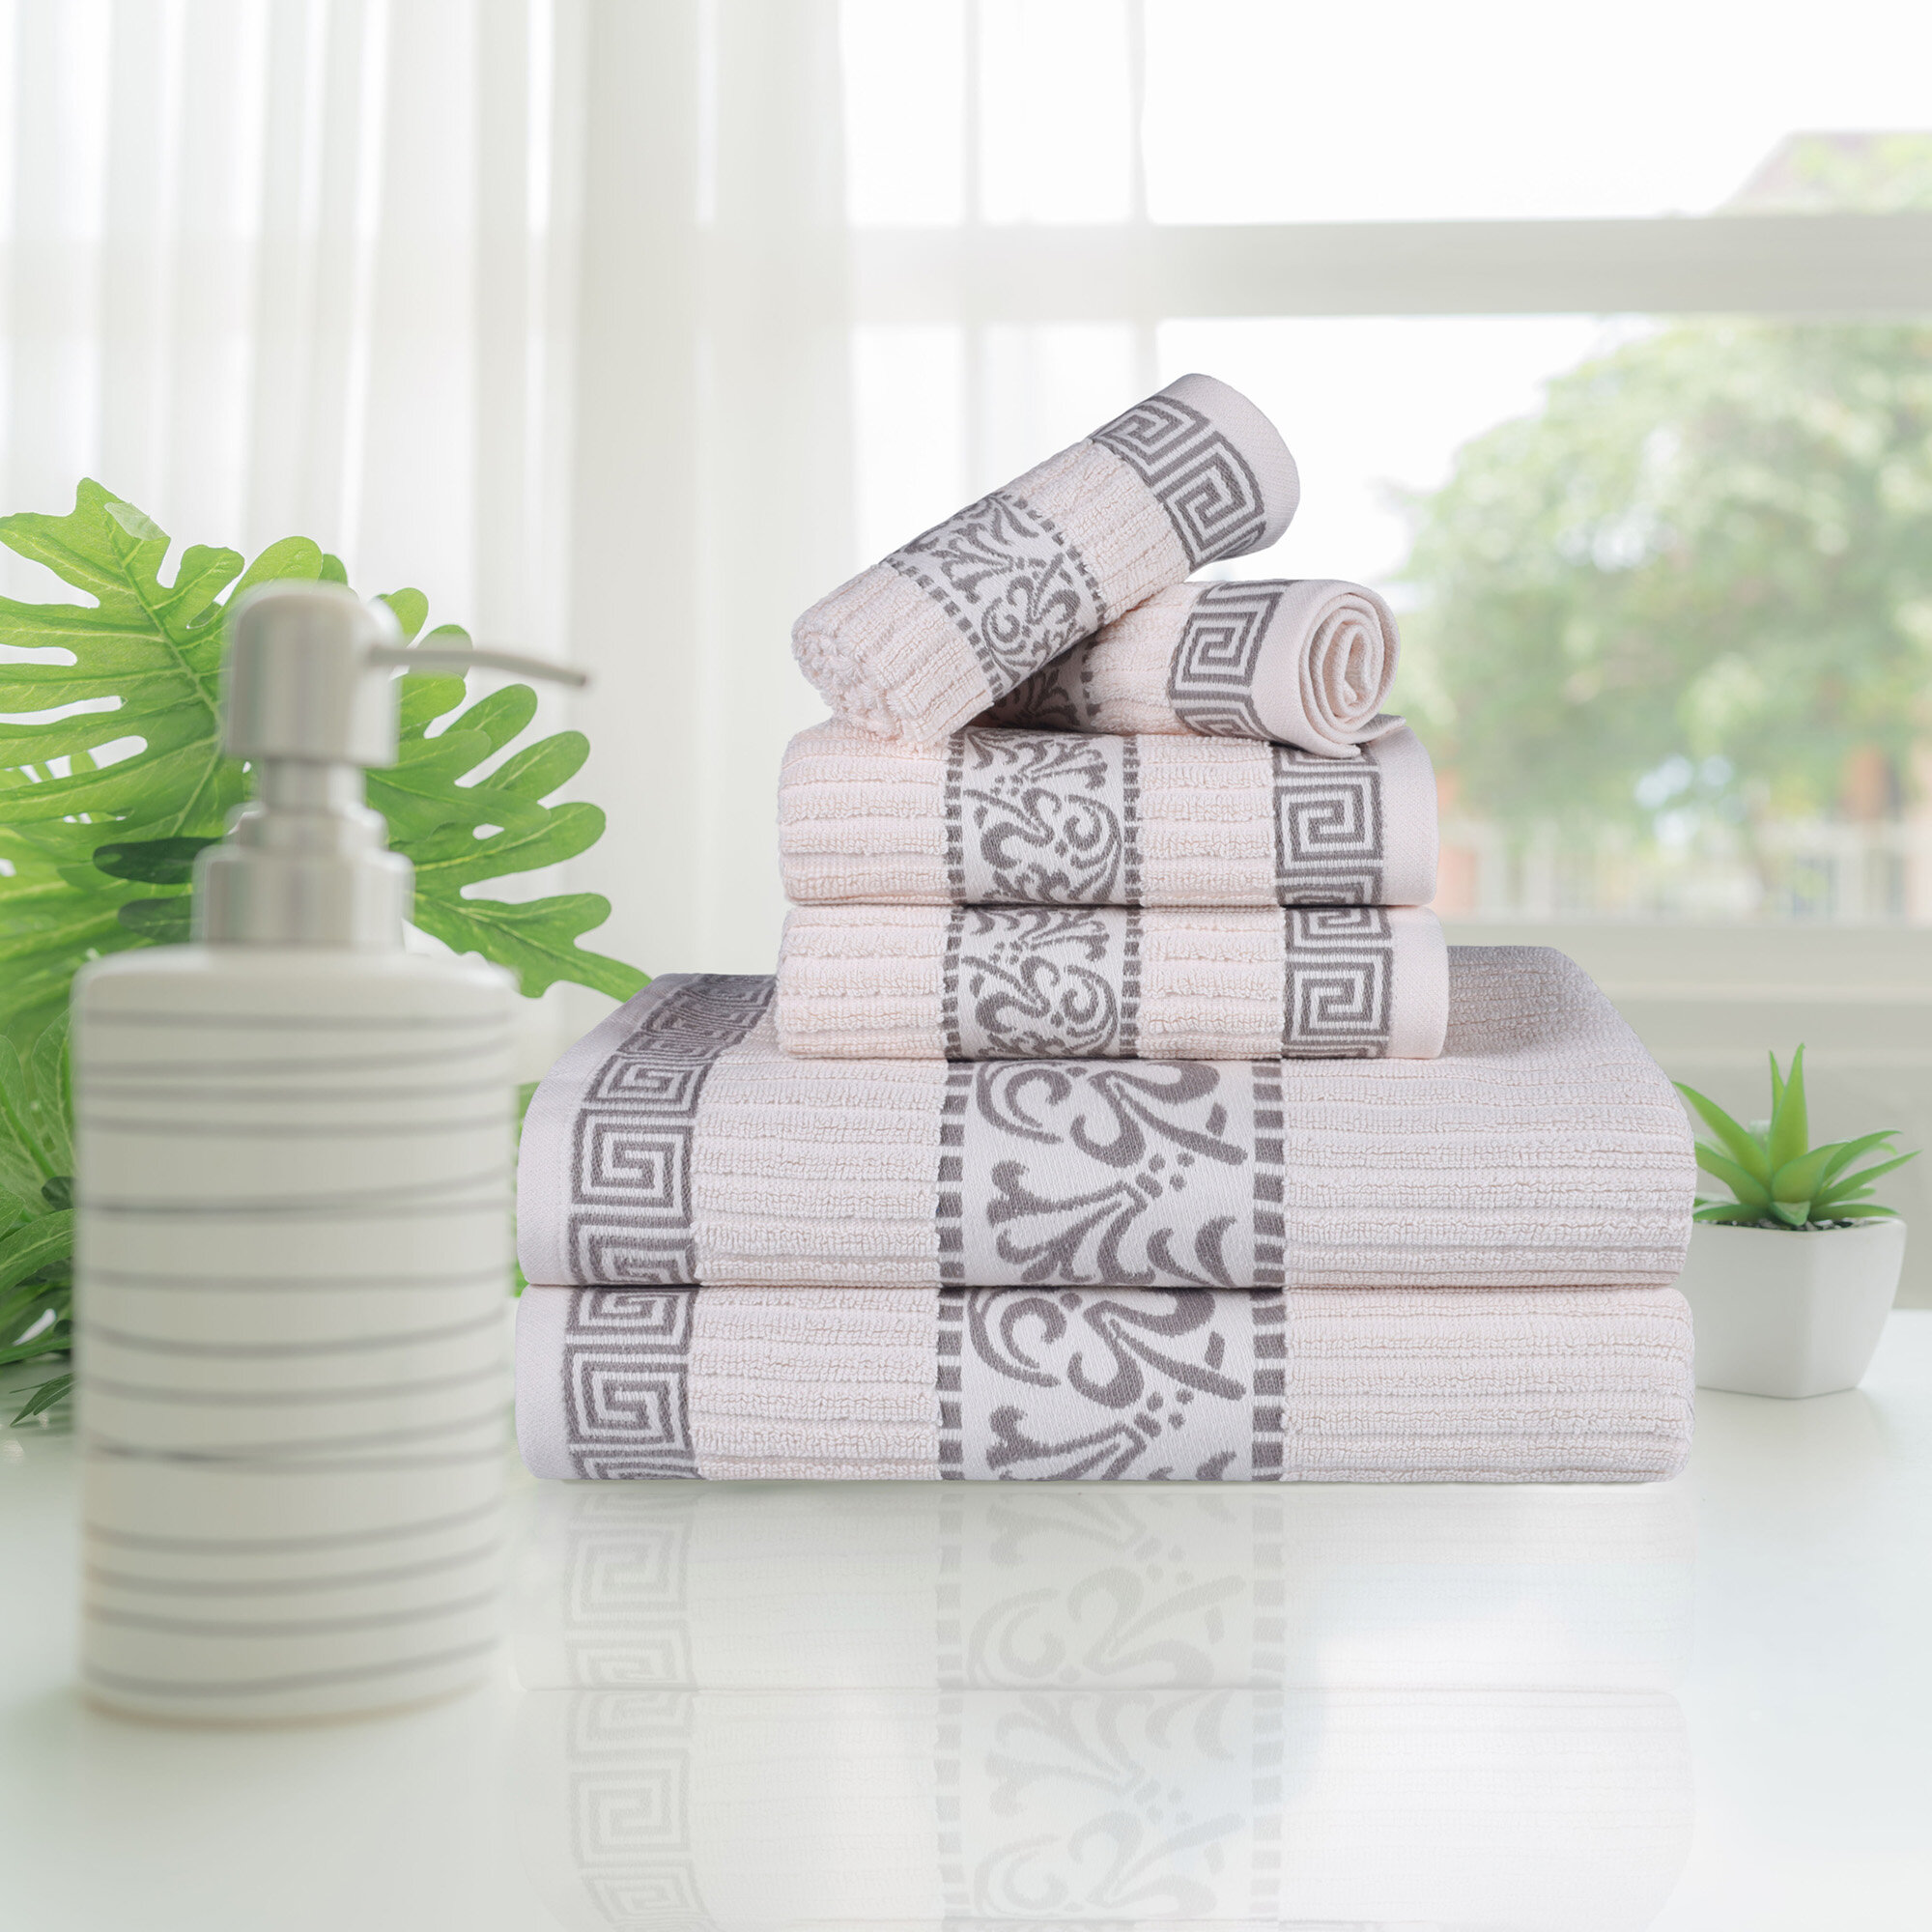 6 Piece Jacquard Woven Towel Sets Include 2 Bath Towels, 2 Hand